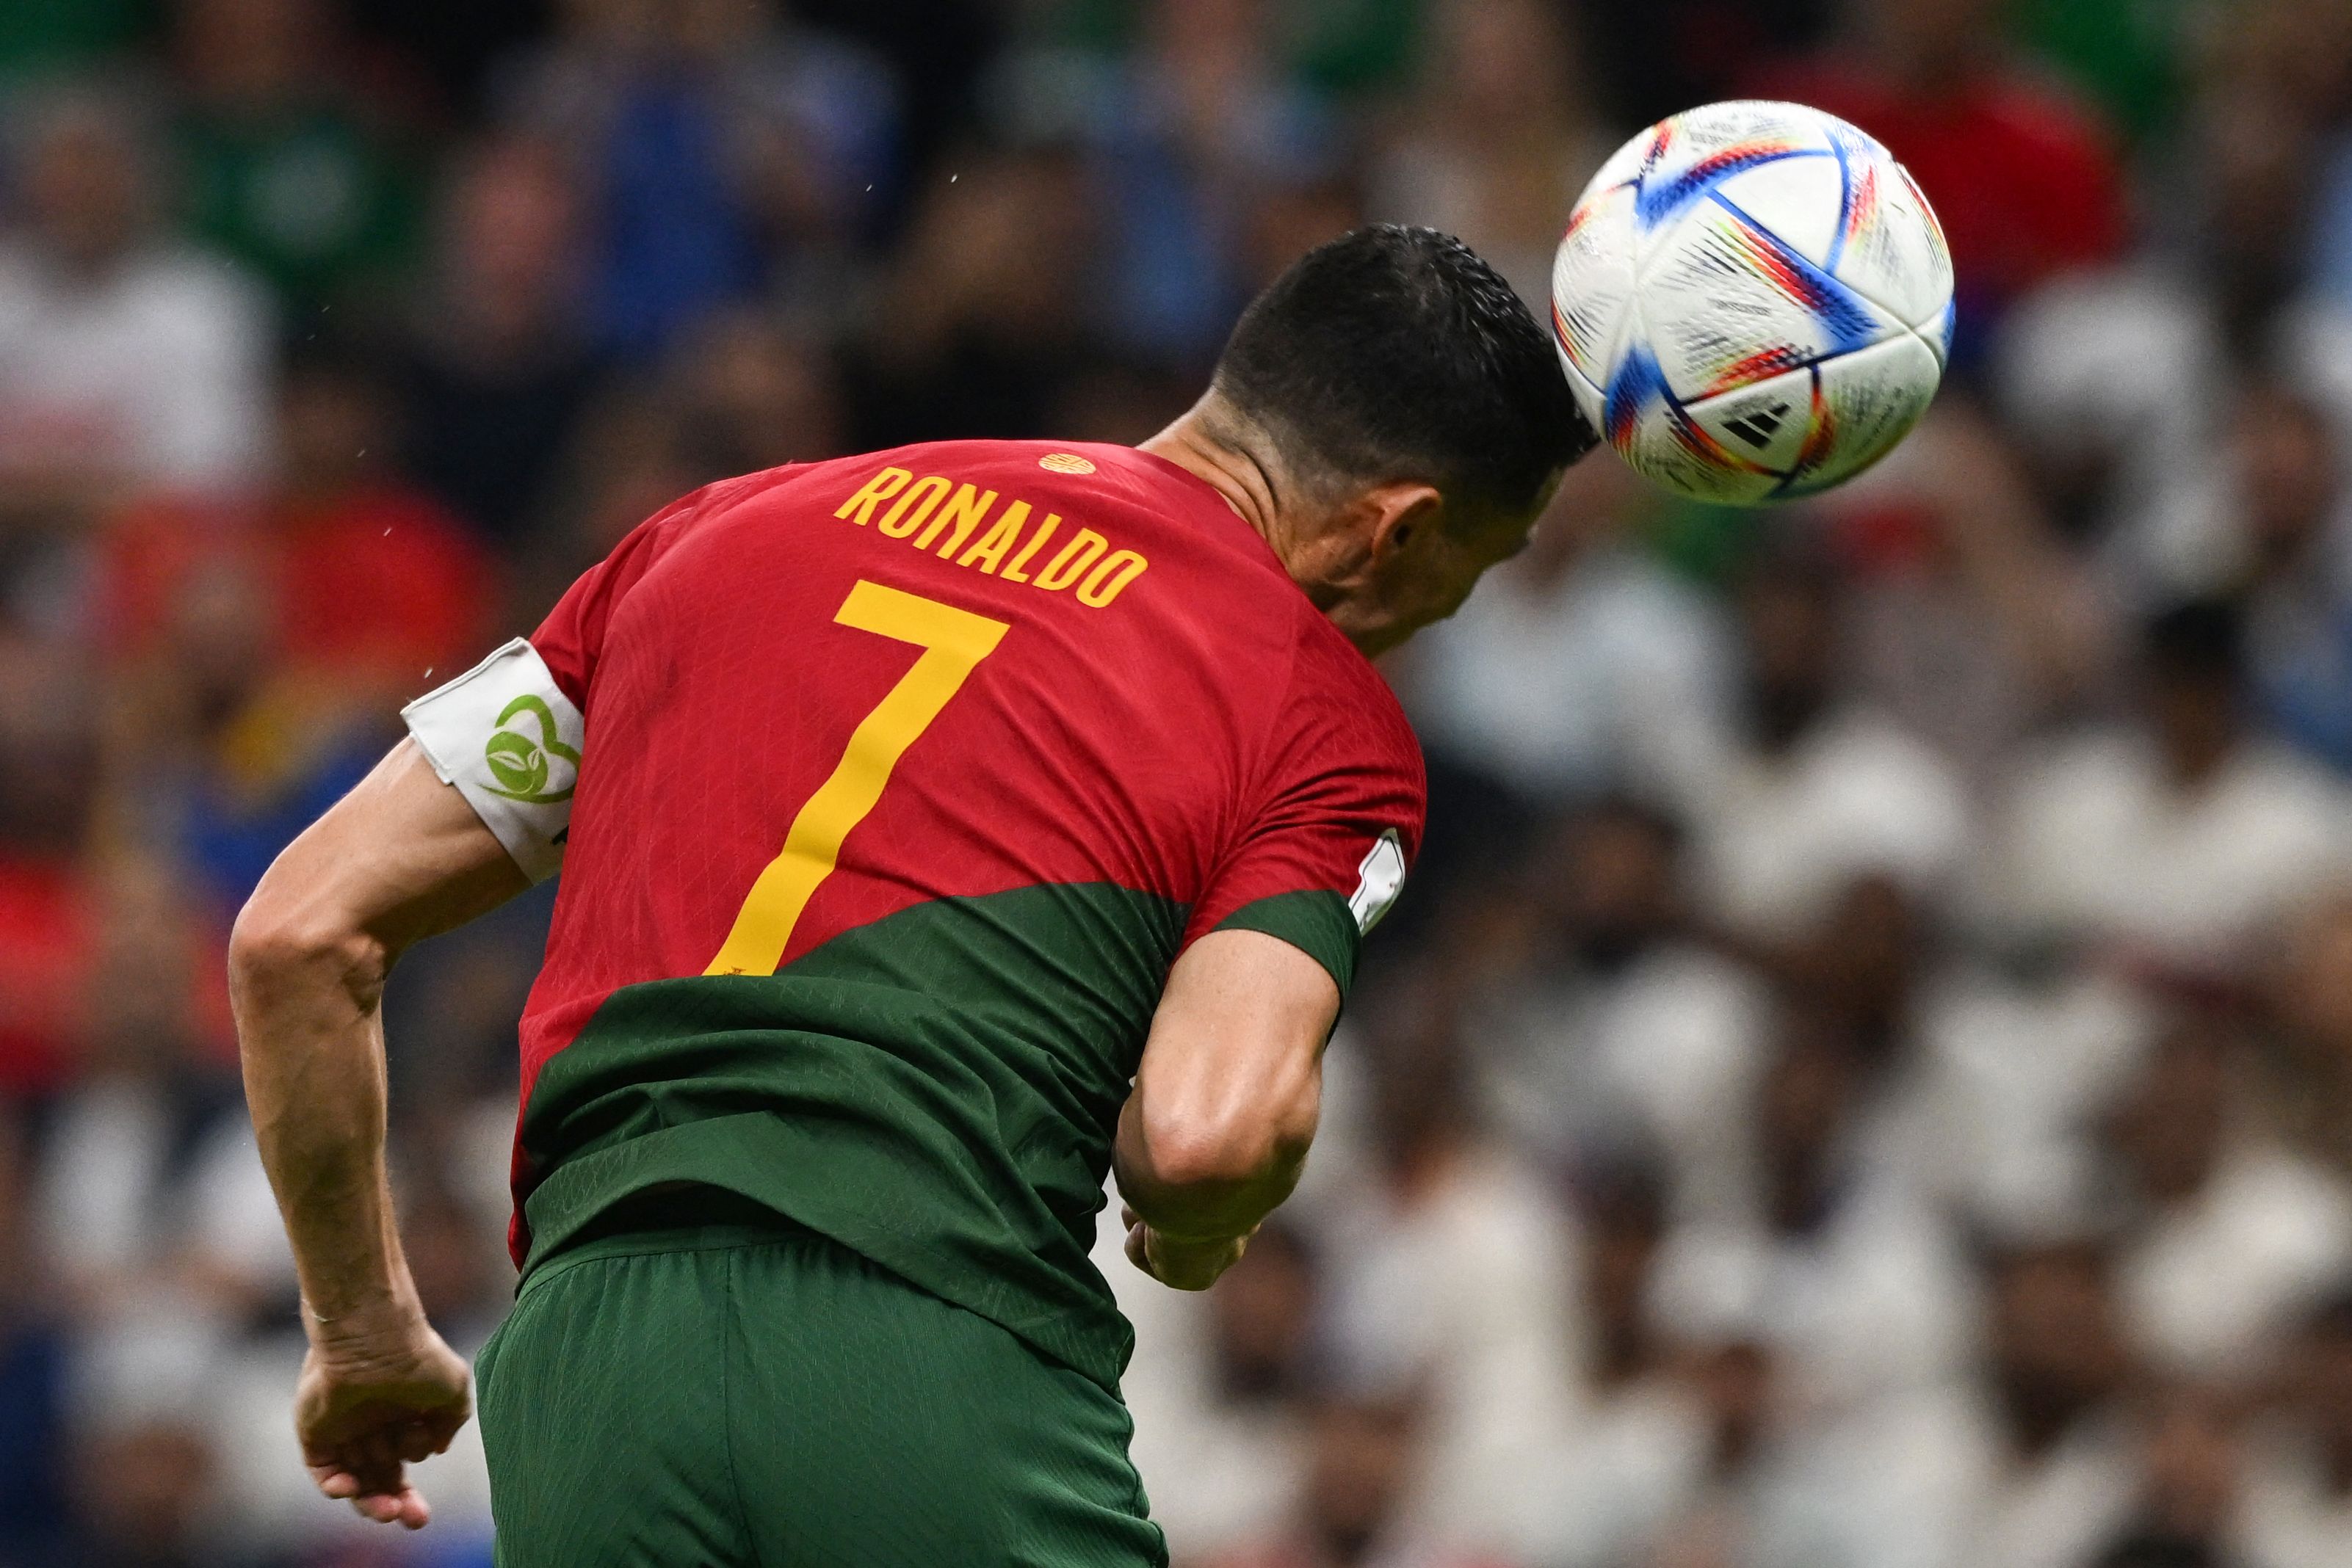 Cristiano Ronaldo, en la jugada del primer gol de Portugal contra Uruguay. (Foto Prensa Libre: AFP)